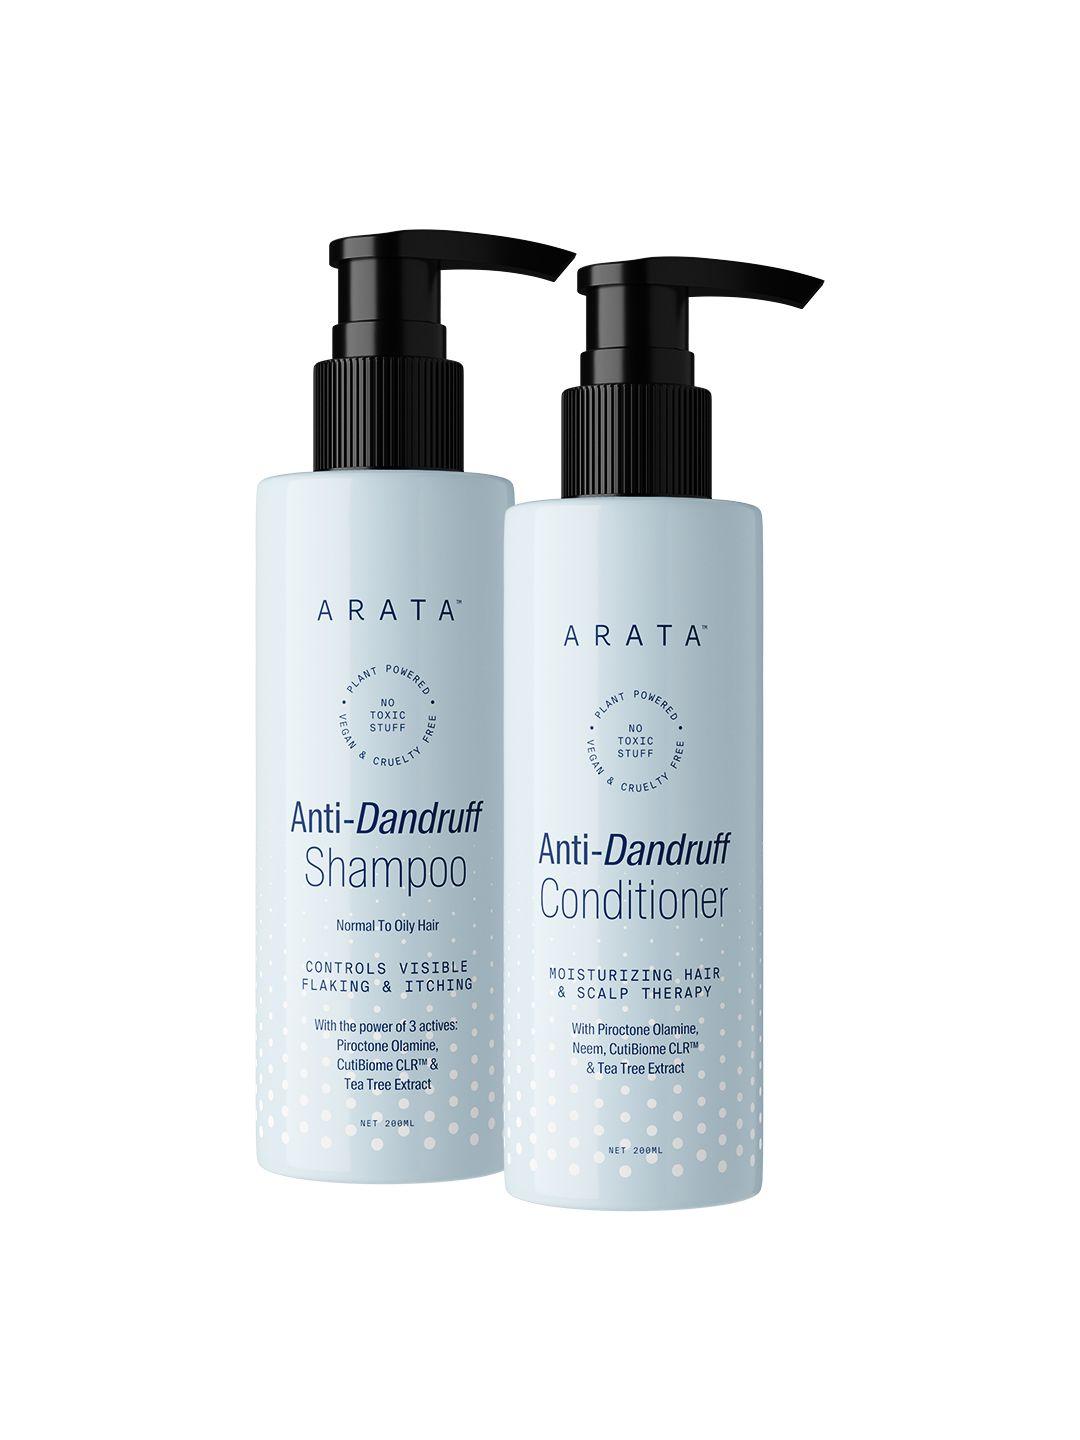 arata set of anti-dandruff shampoo & conditioner with tea tree extract - 200 ml each